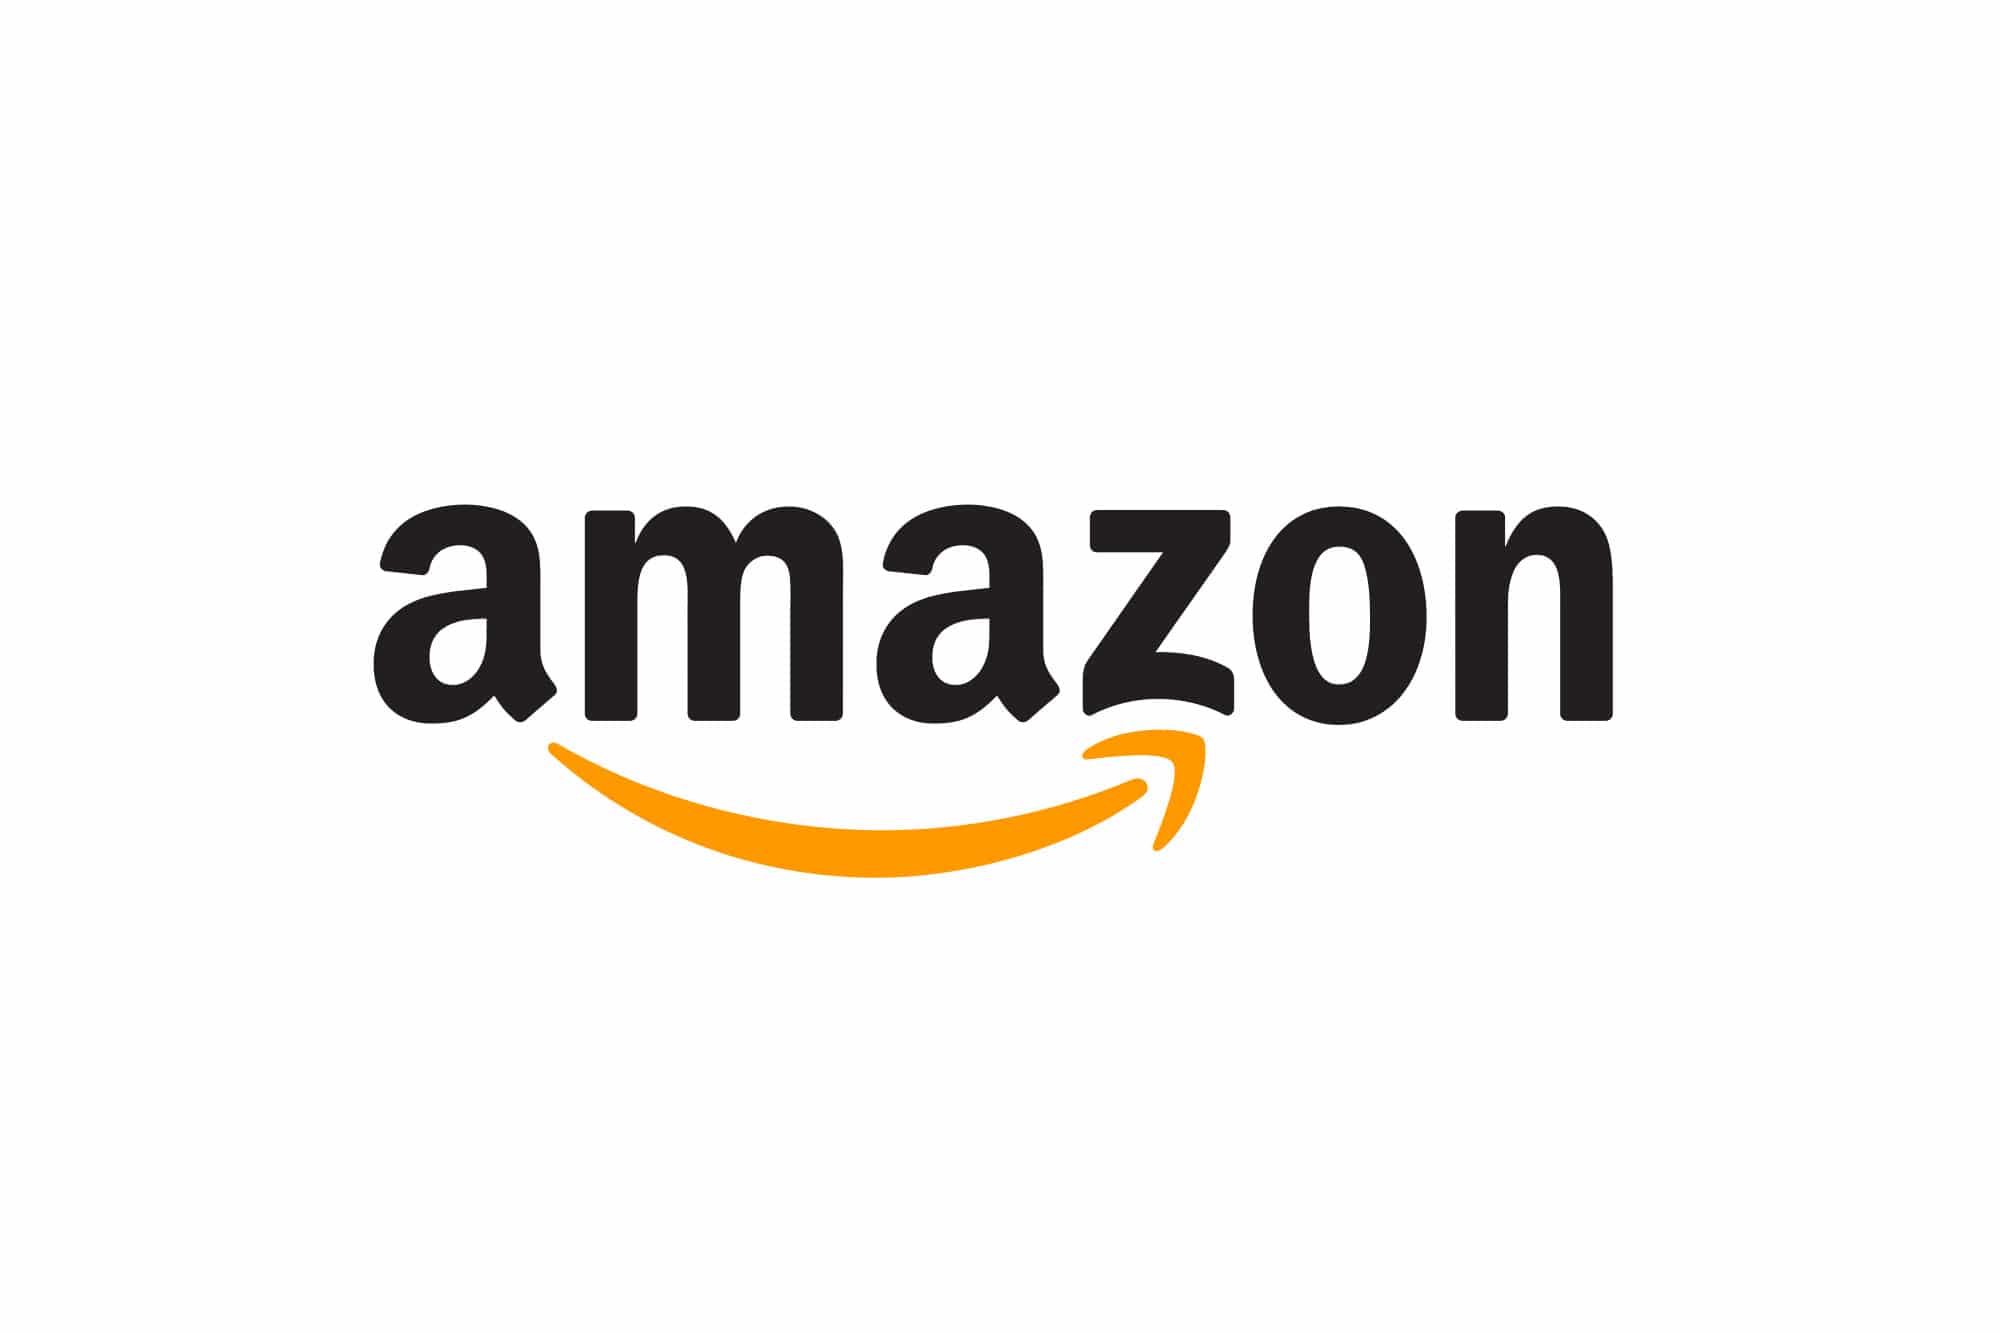 Amazon logo - Selling everything A-Z